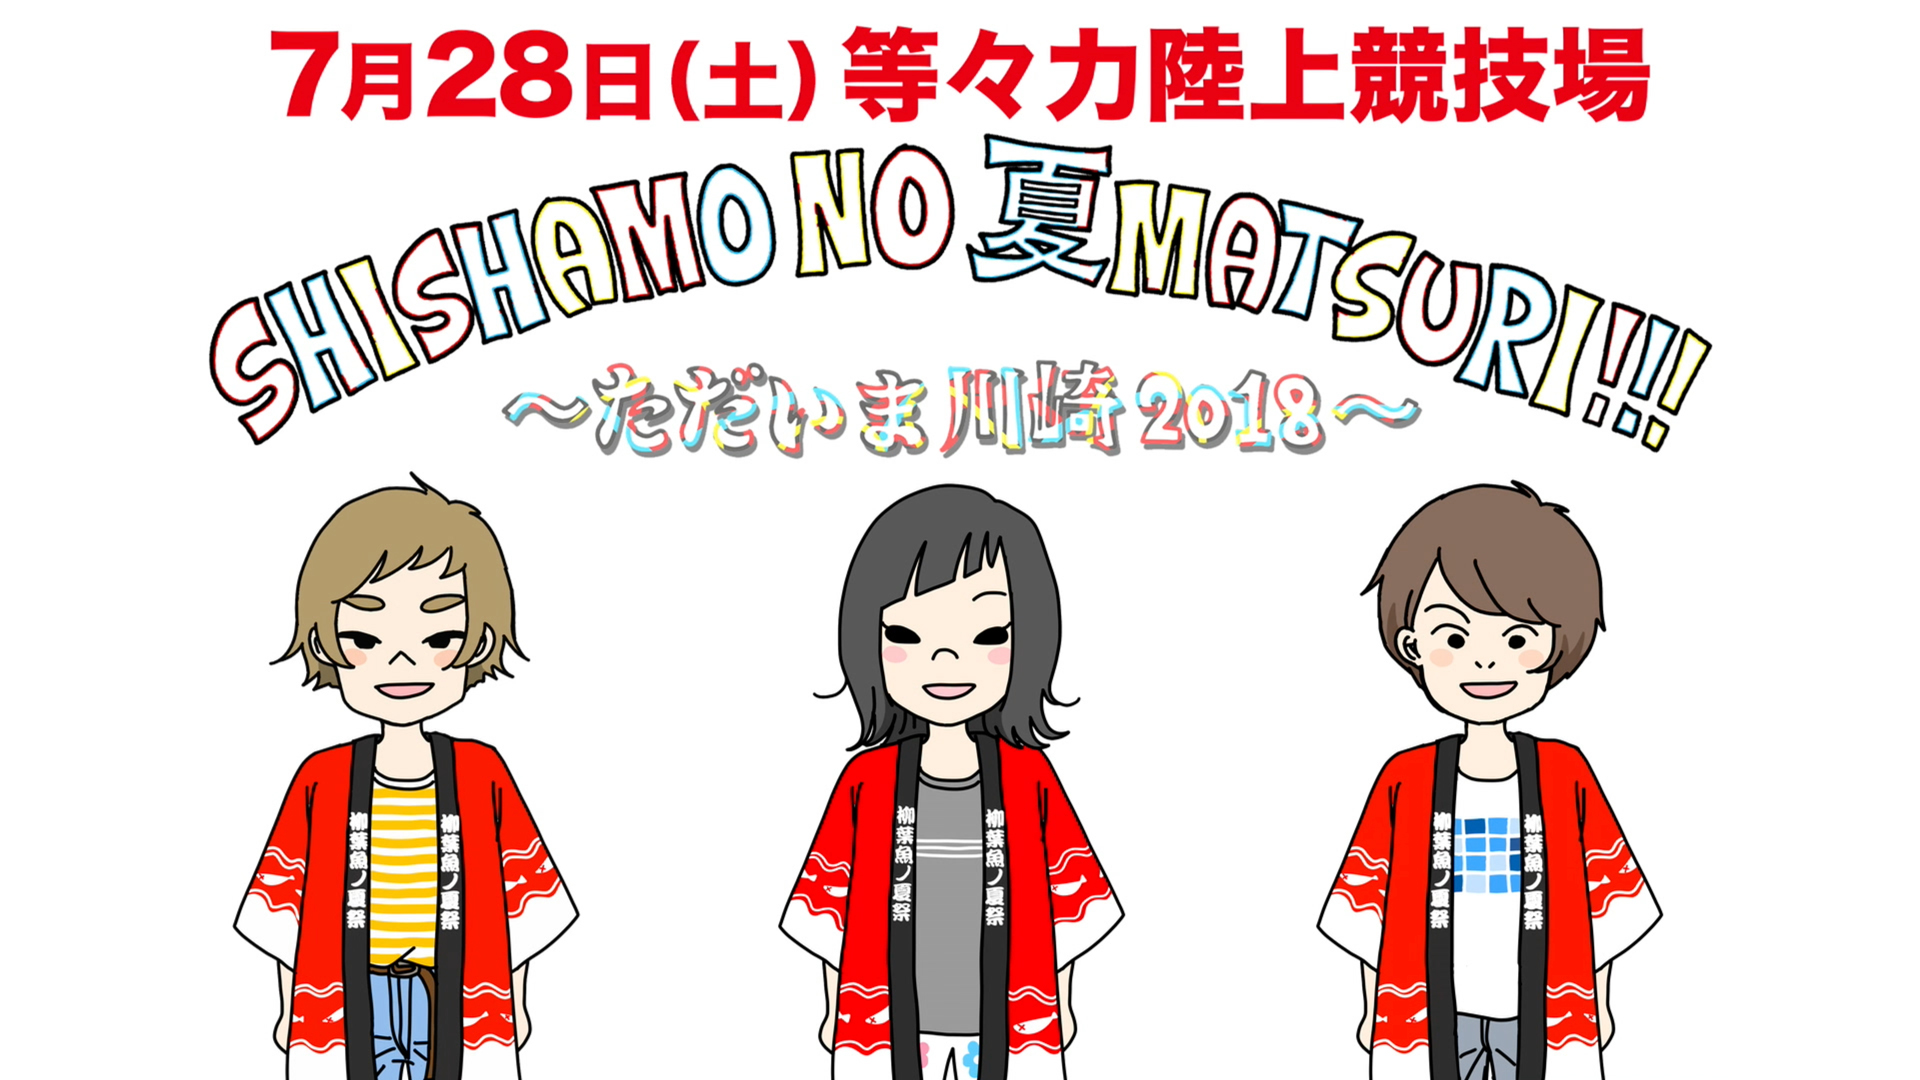 About Shishamo Shishamo No 夏matsuri ただいま川崎18 開幕直前sp をyoutubeに公開 Shishamo Official Website